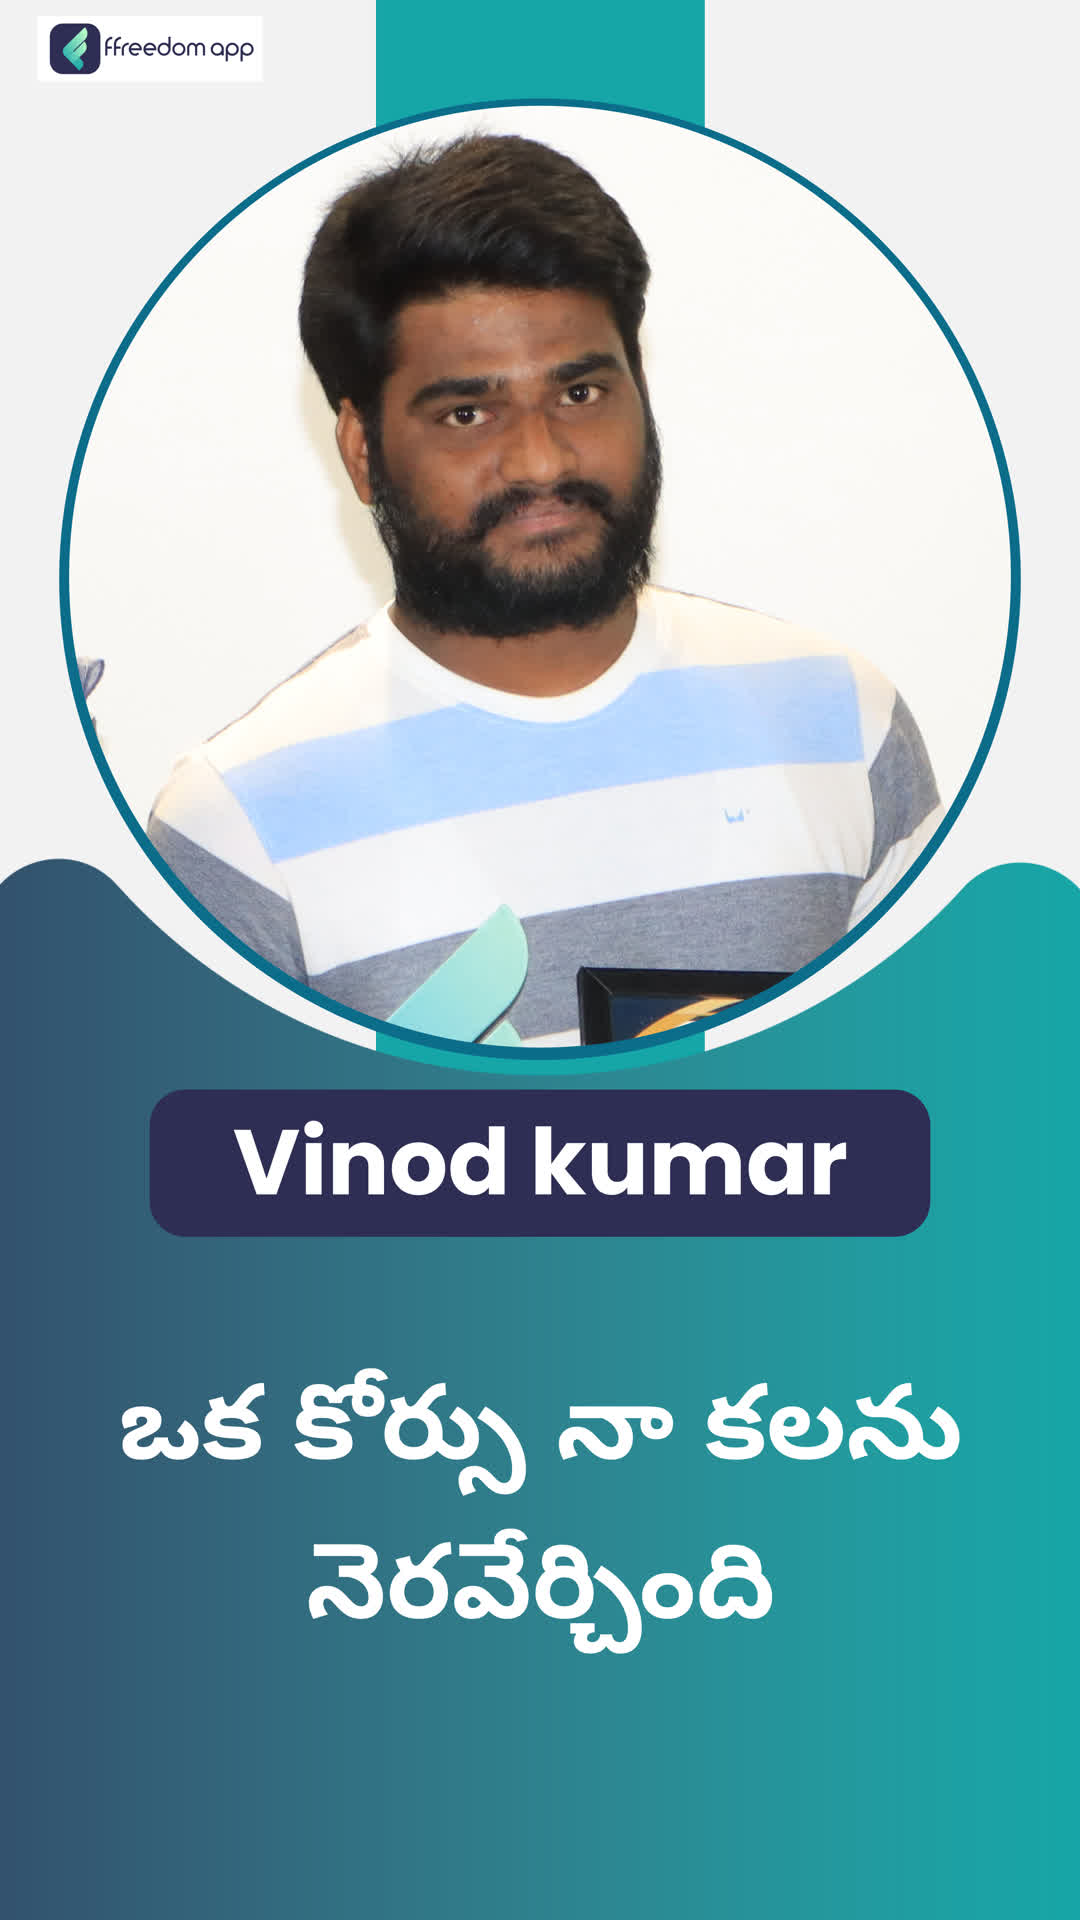 G Vinod Kumar's Honest Review of ffreedom app - Chitradurga ,Karnataka